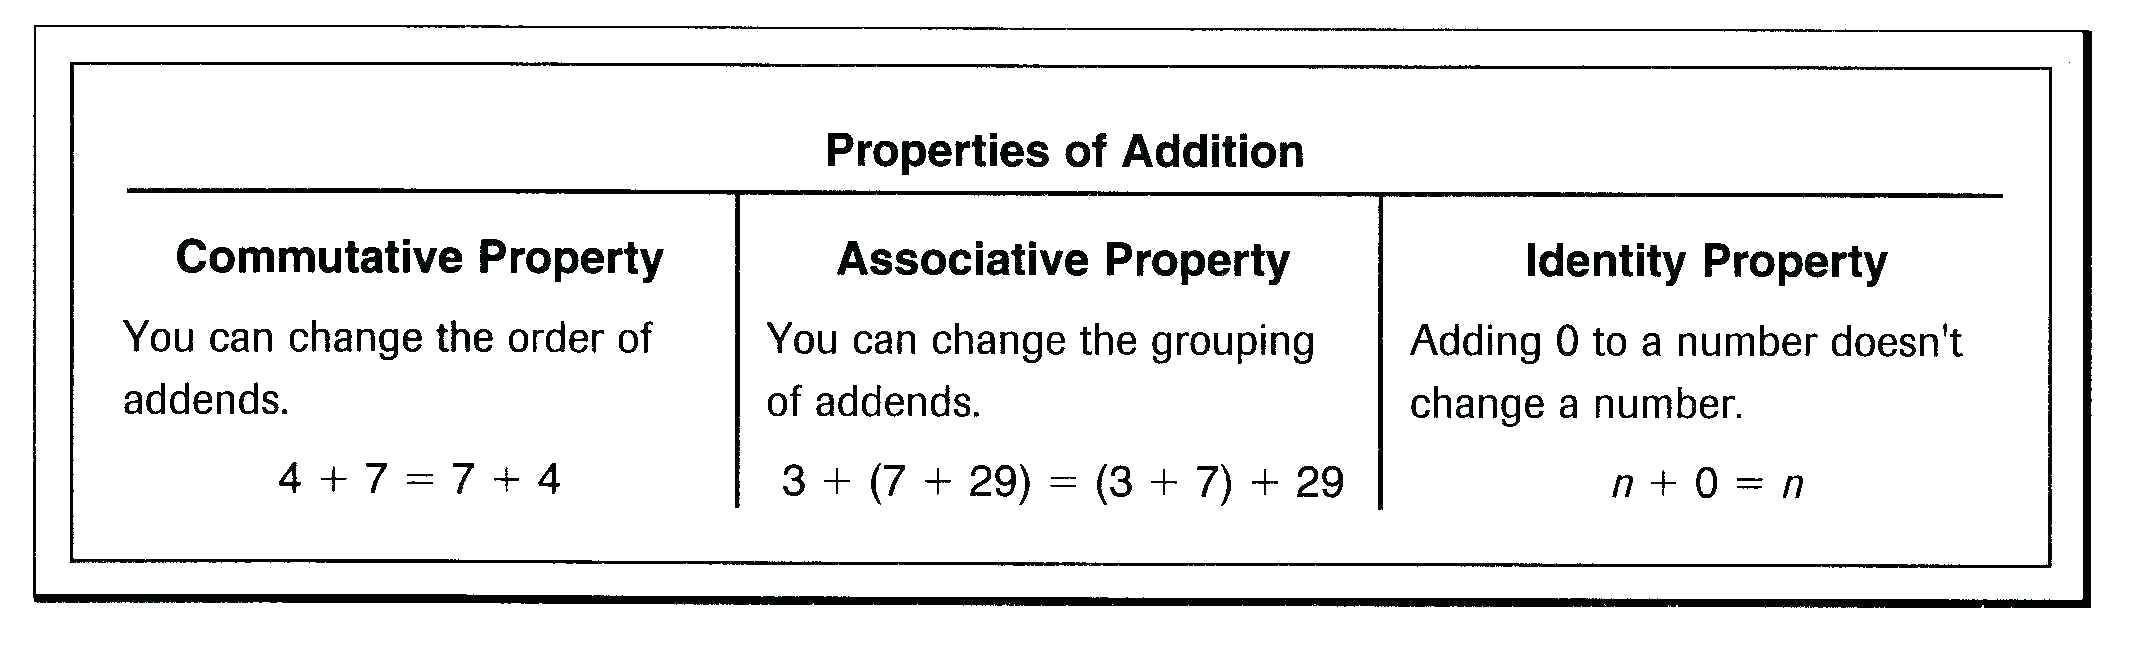 Associative Property Of Addition Worksheets 3Rd Grade Db excel